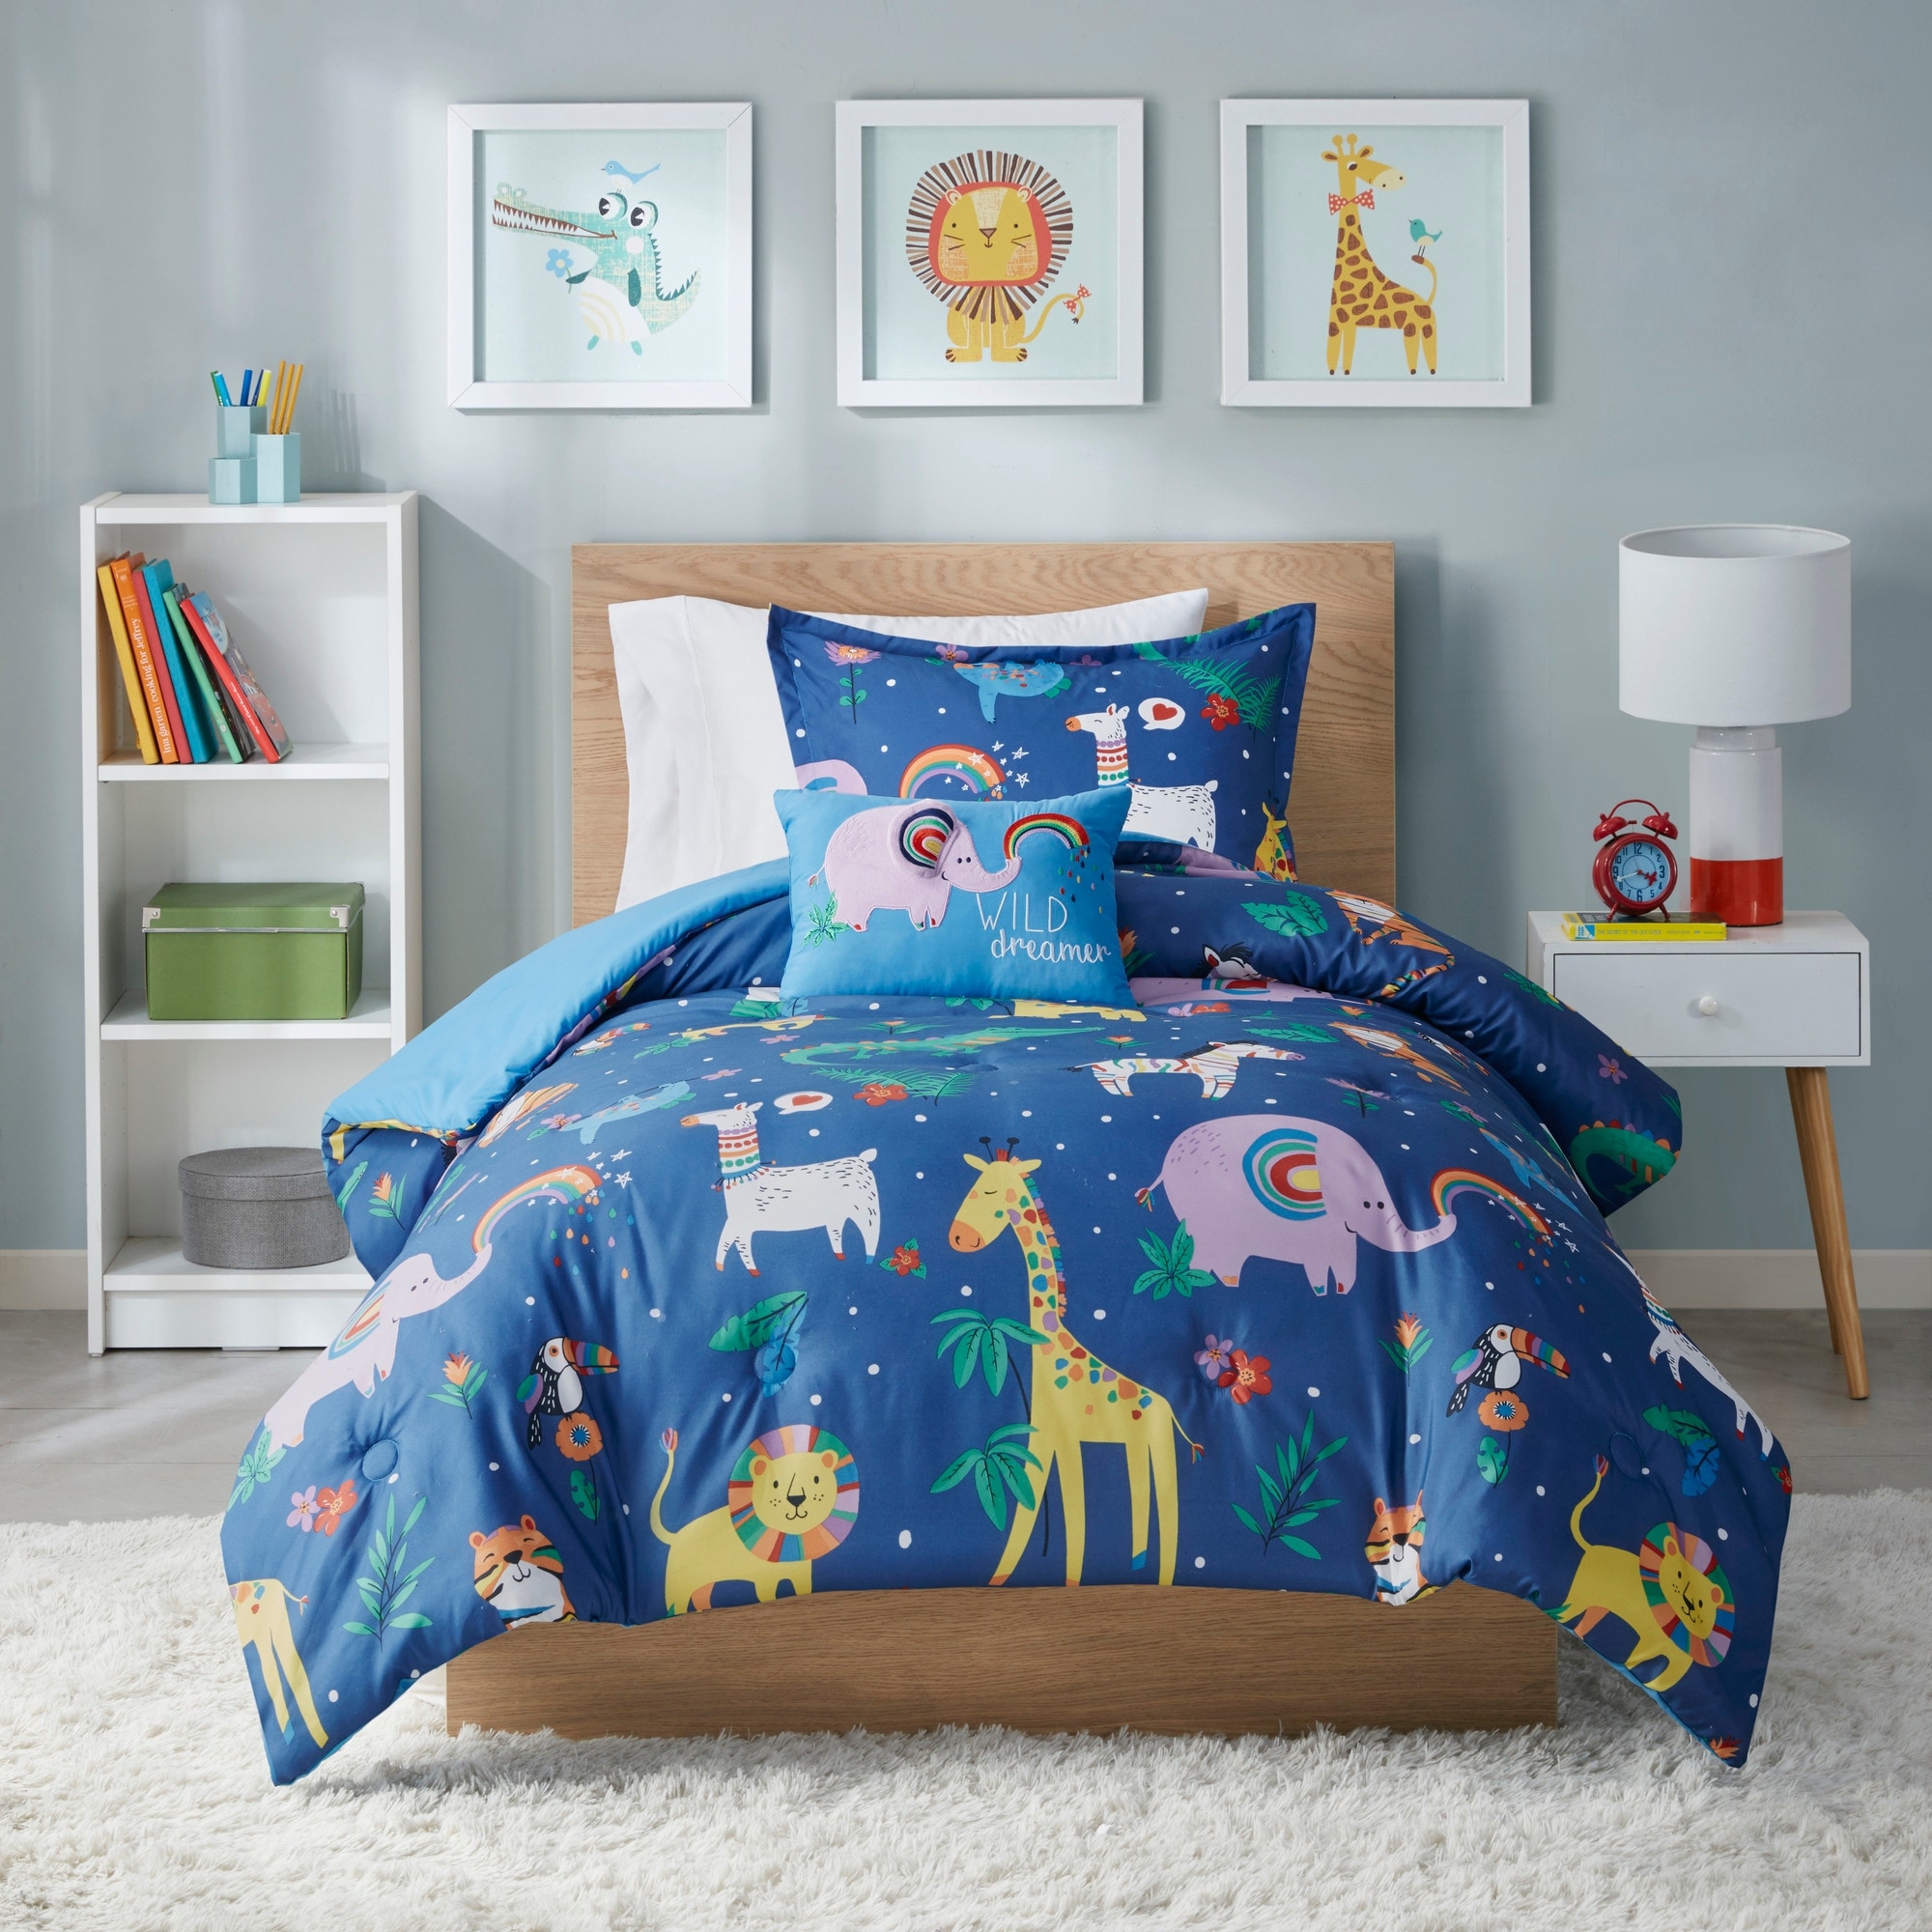 3D Giraffe Print Comforter Set for Boys Girls Kids Teens,3-Pieces Rainbow Sky Bedding Comforter Full Size,Cute Giraffe Printed Quilt Set with 2 Pillowcases